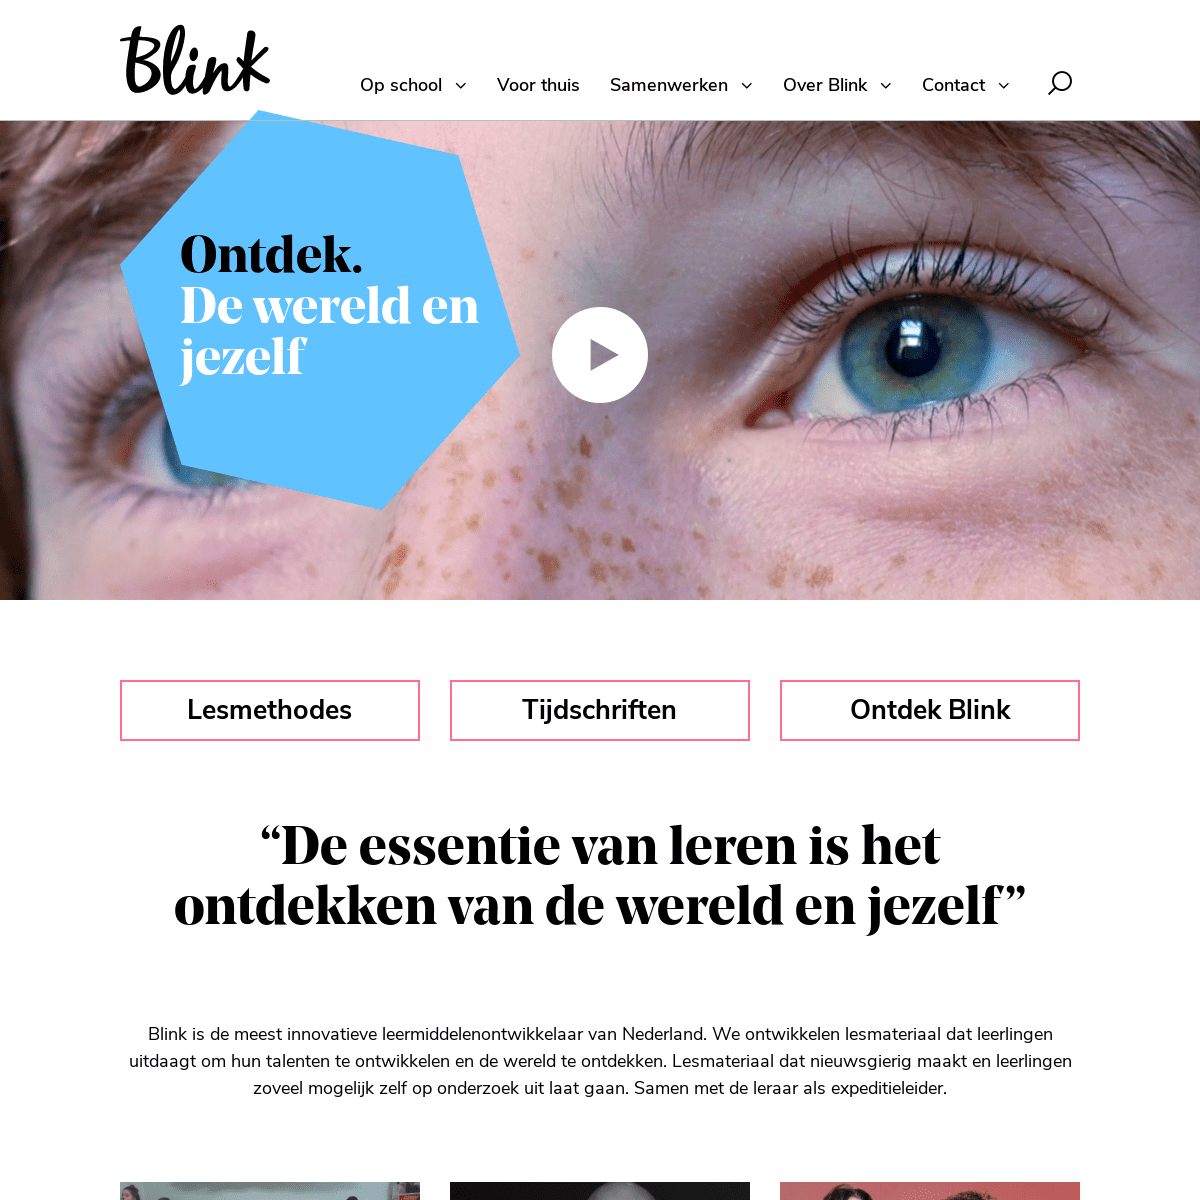 A complete backup of https://blink.nl